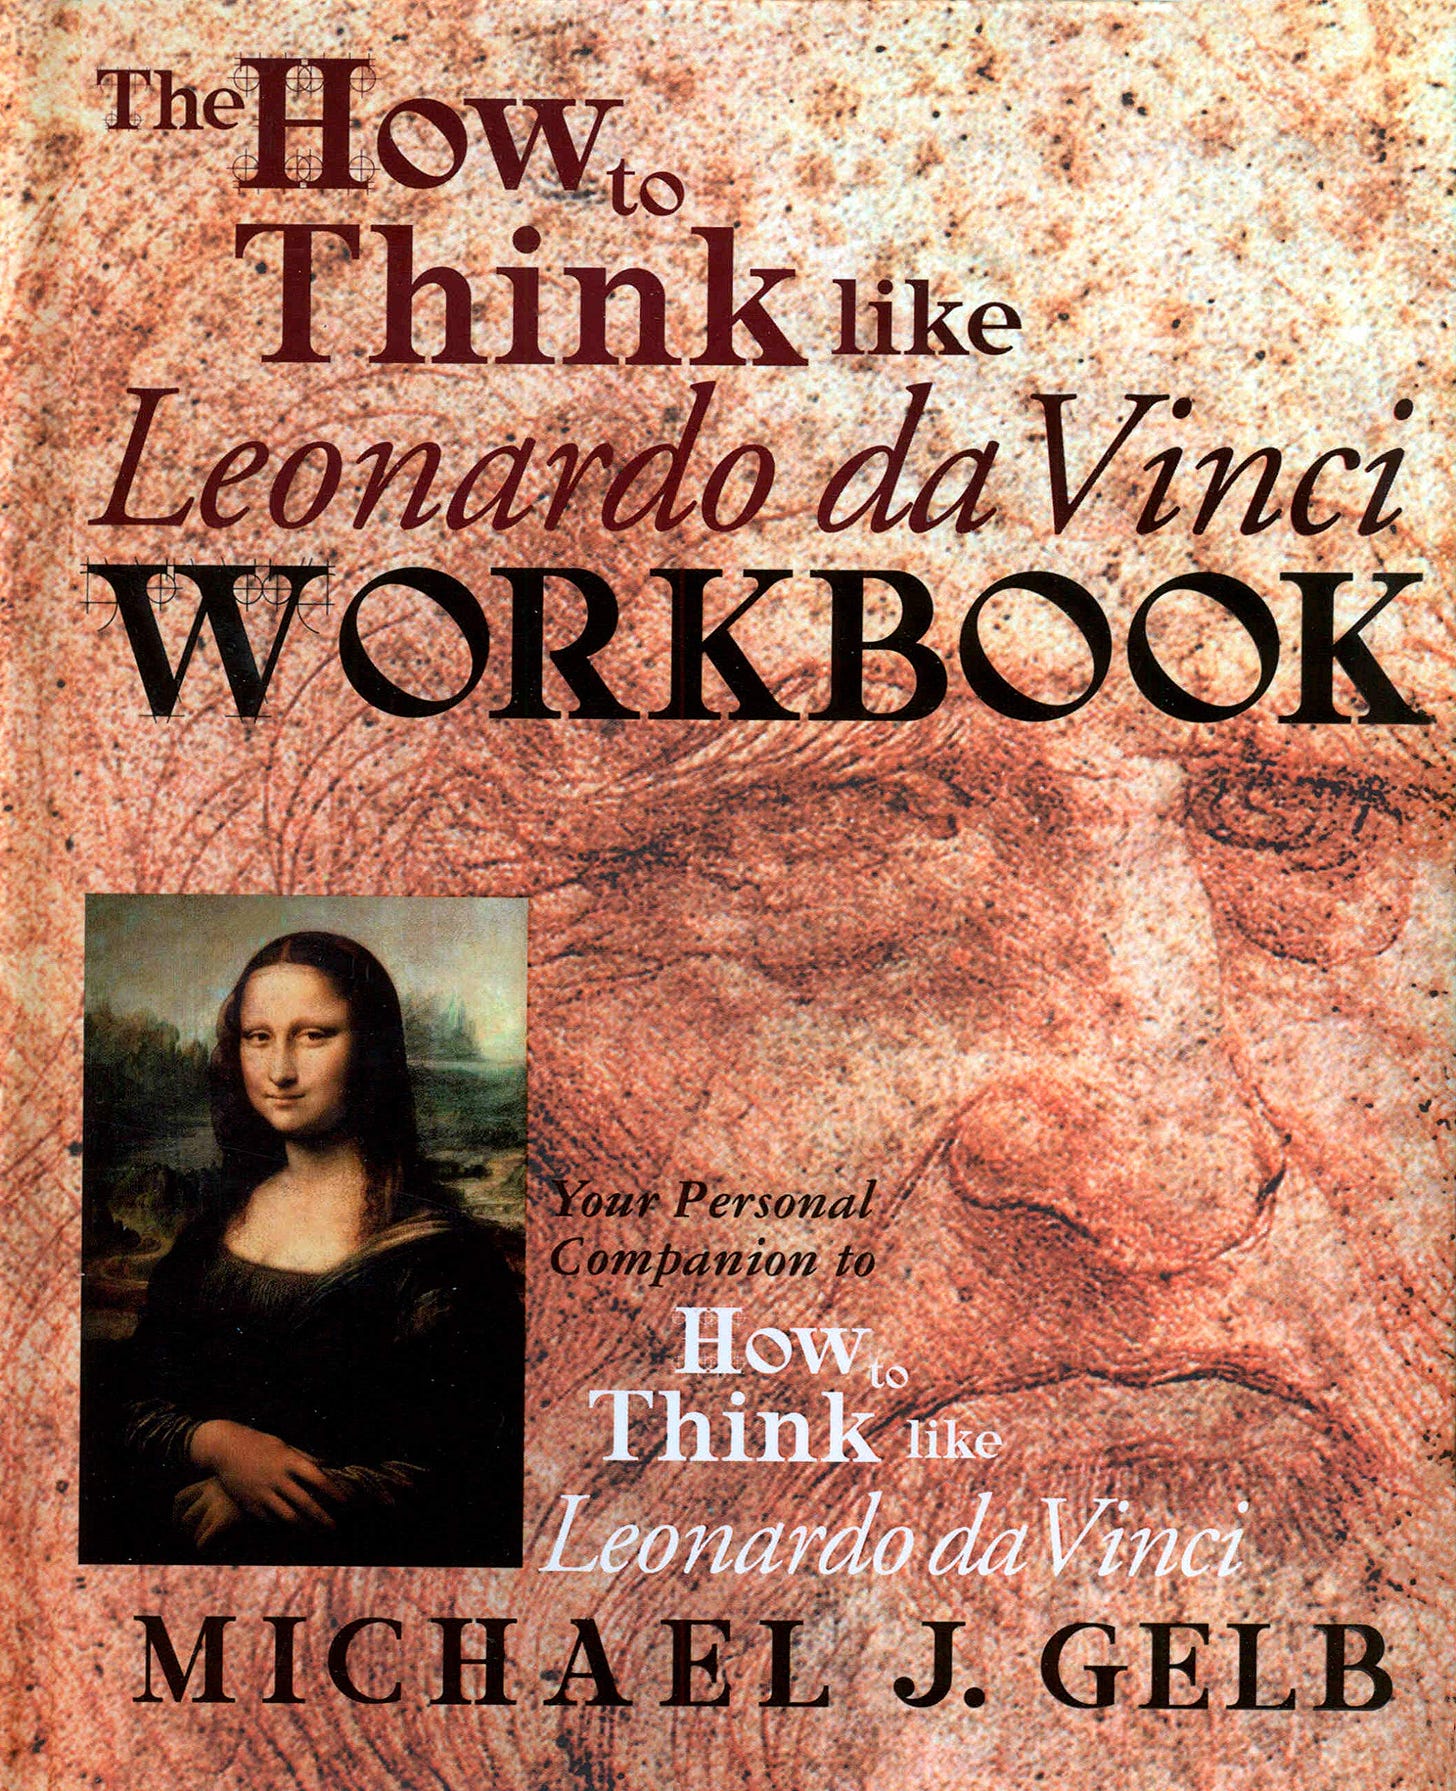 Book cover for How to Think Like Leonardo da Vinci Workbook, featuring one of da Vinci's self-portraits and an image of the Mona Lisa.